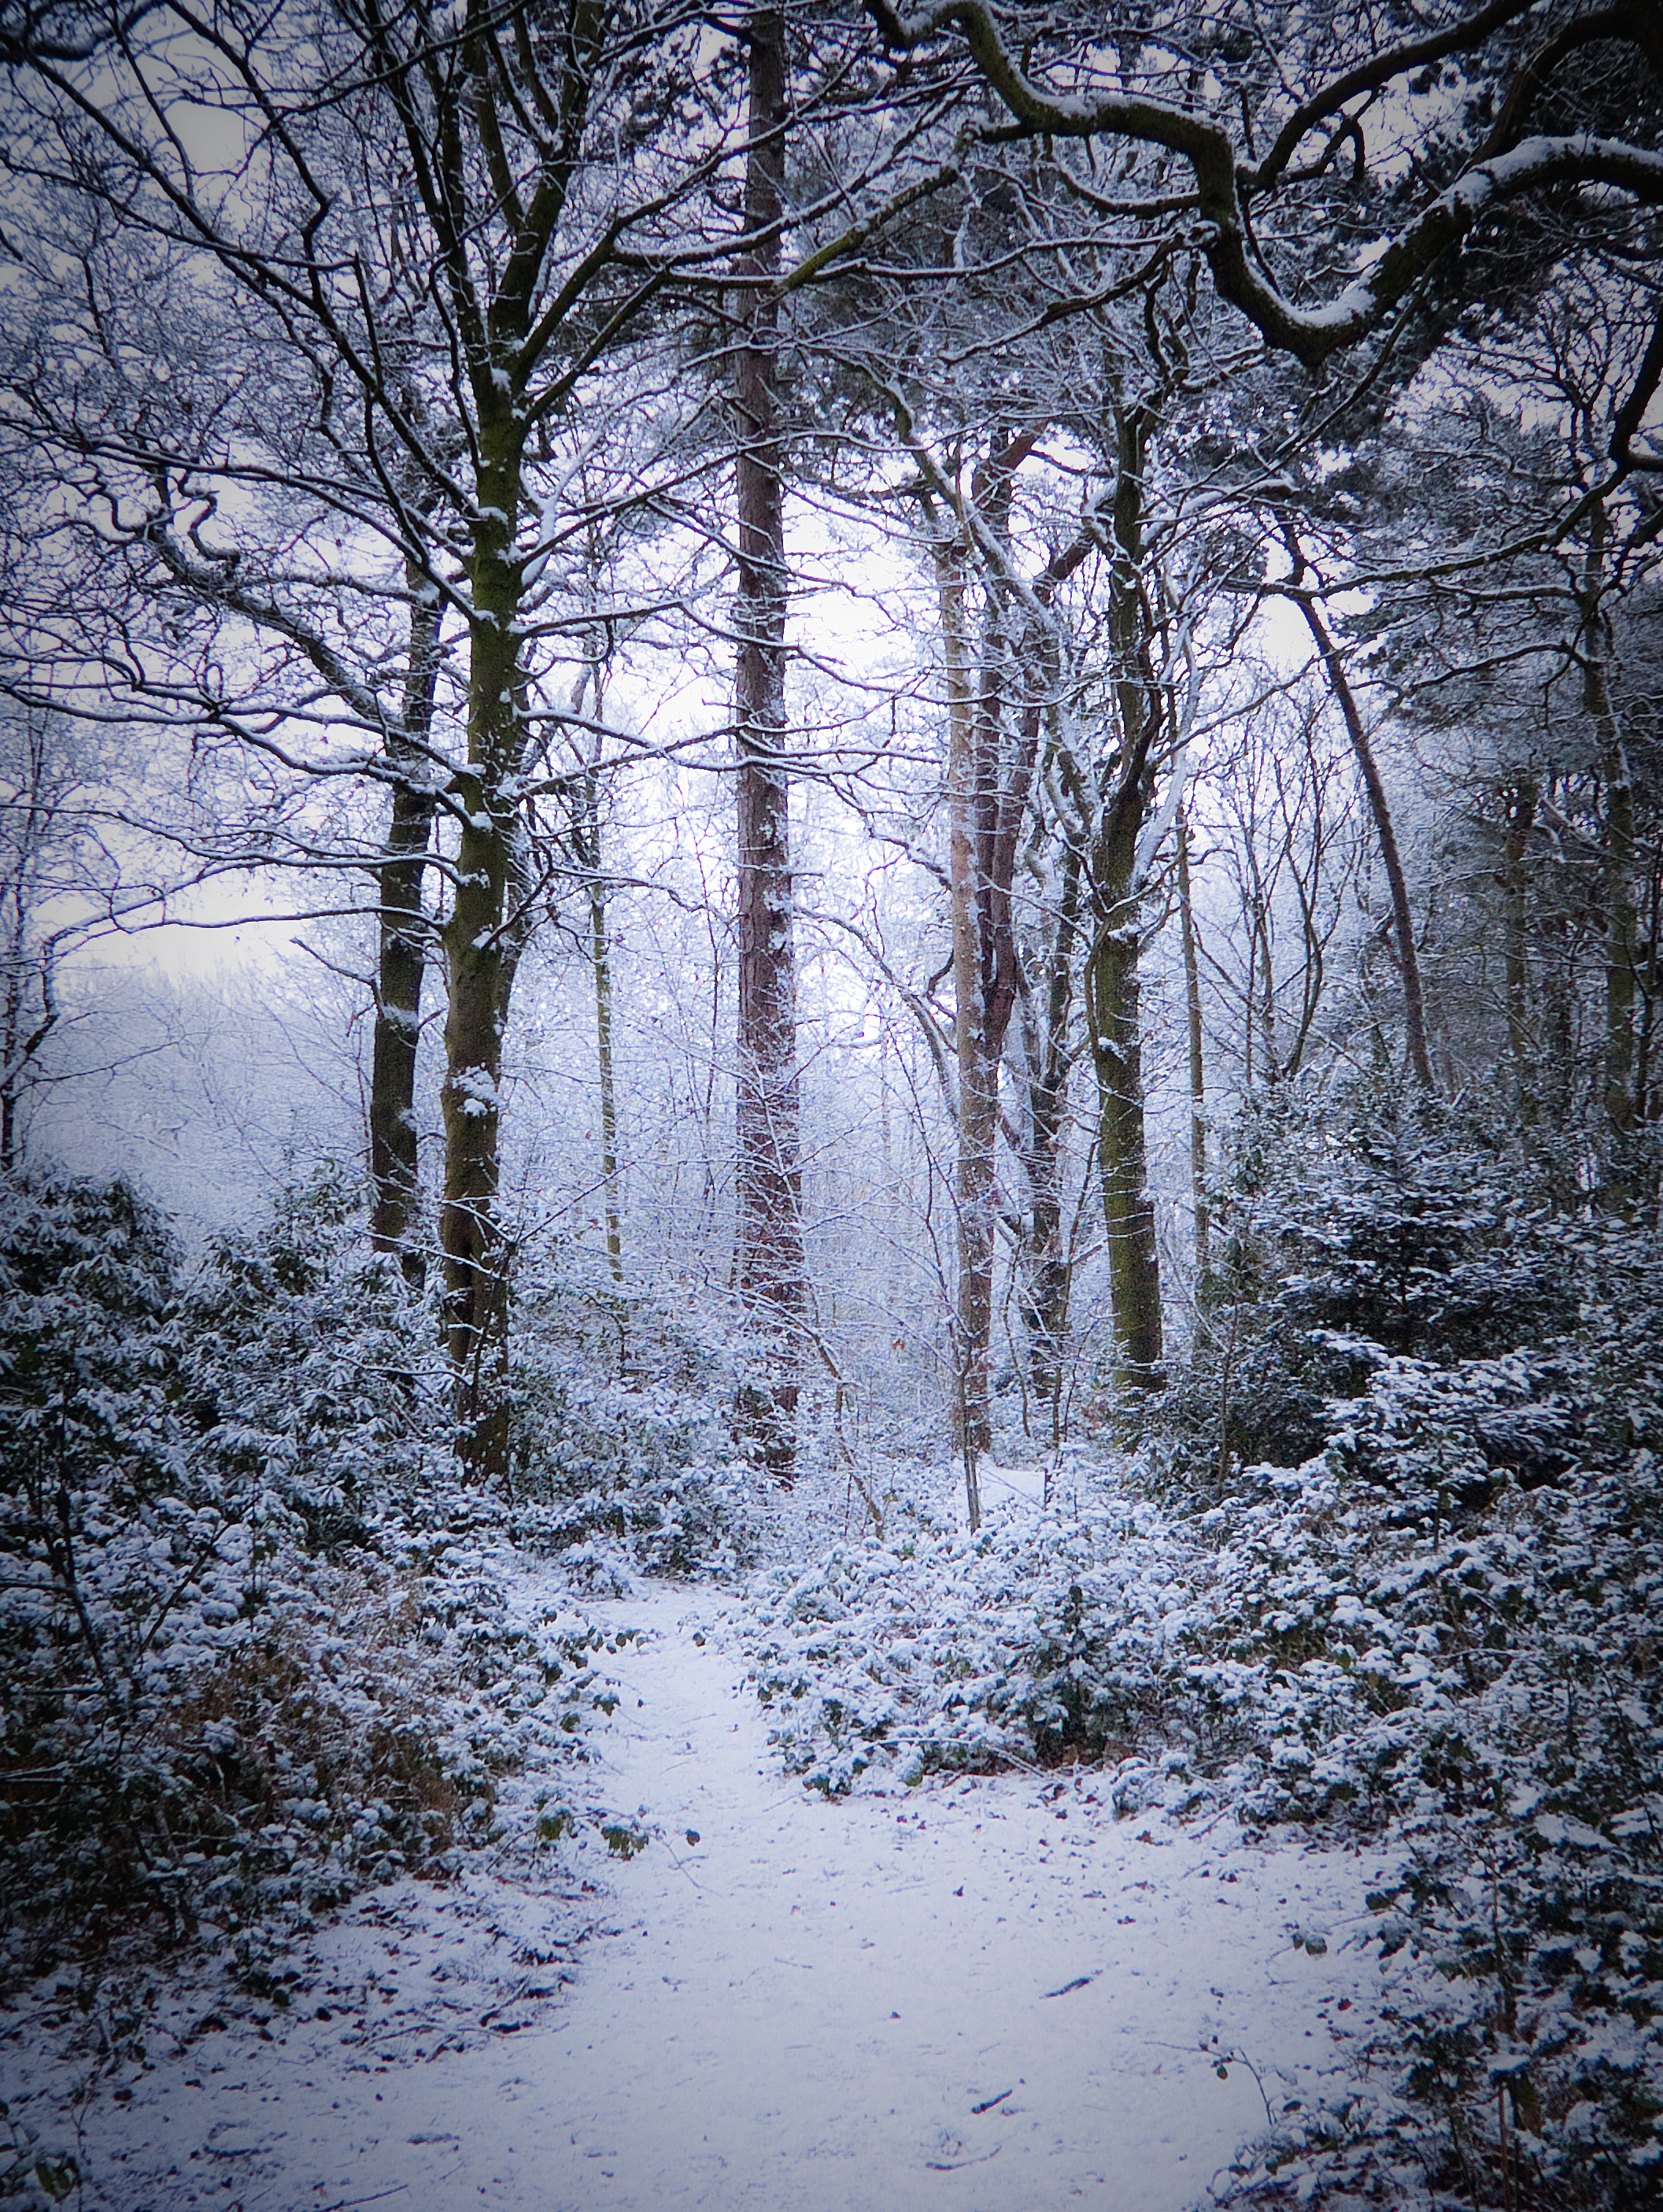 stock__winter_snow_in_forest_2_by_needanewname-d47cjru.jpg